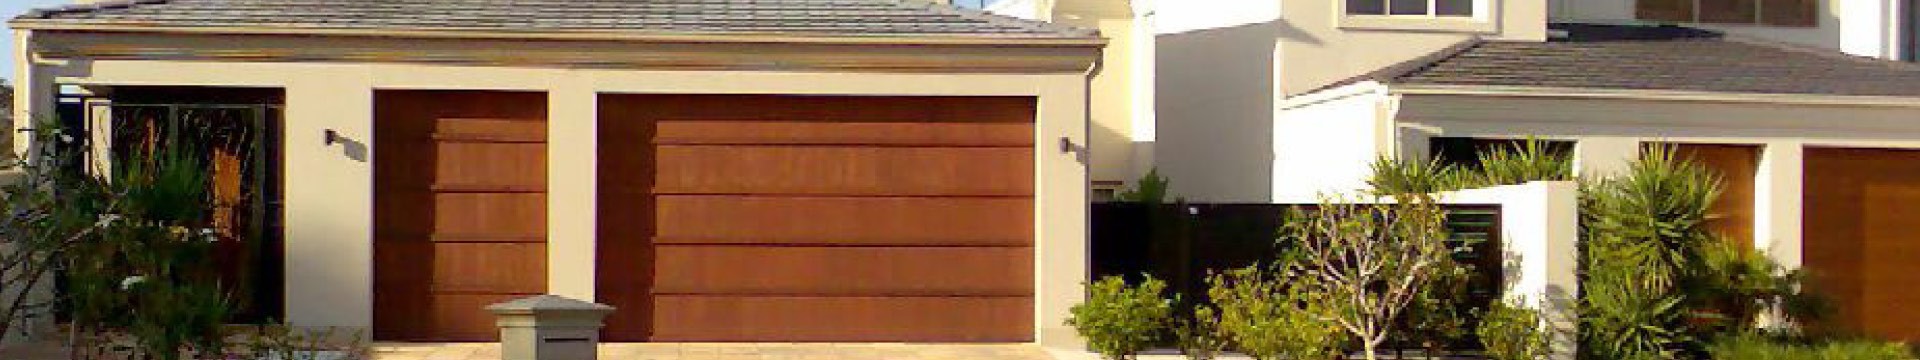 affordable-gold-coast-garage-doors-1.jpg